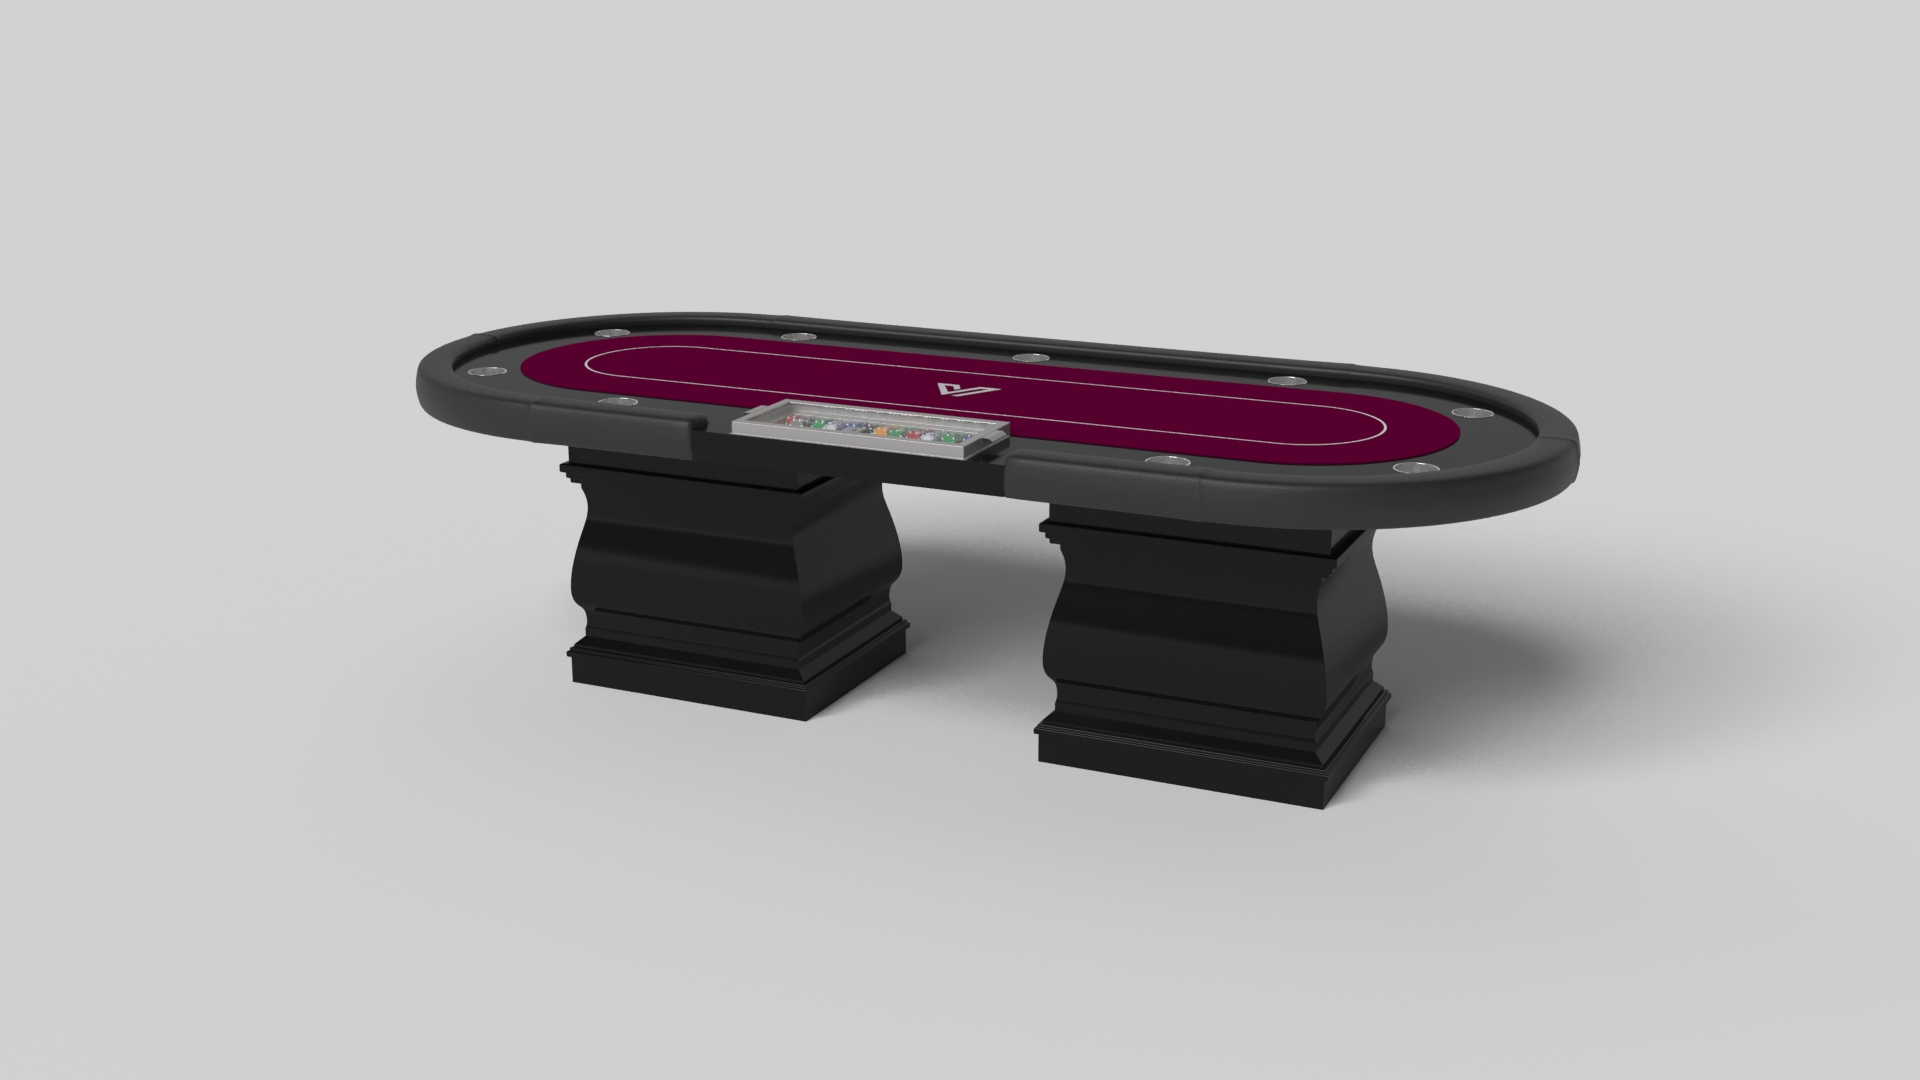 21st Century 125 Piece Luxury Poker Gaming Set by Walker Design